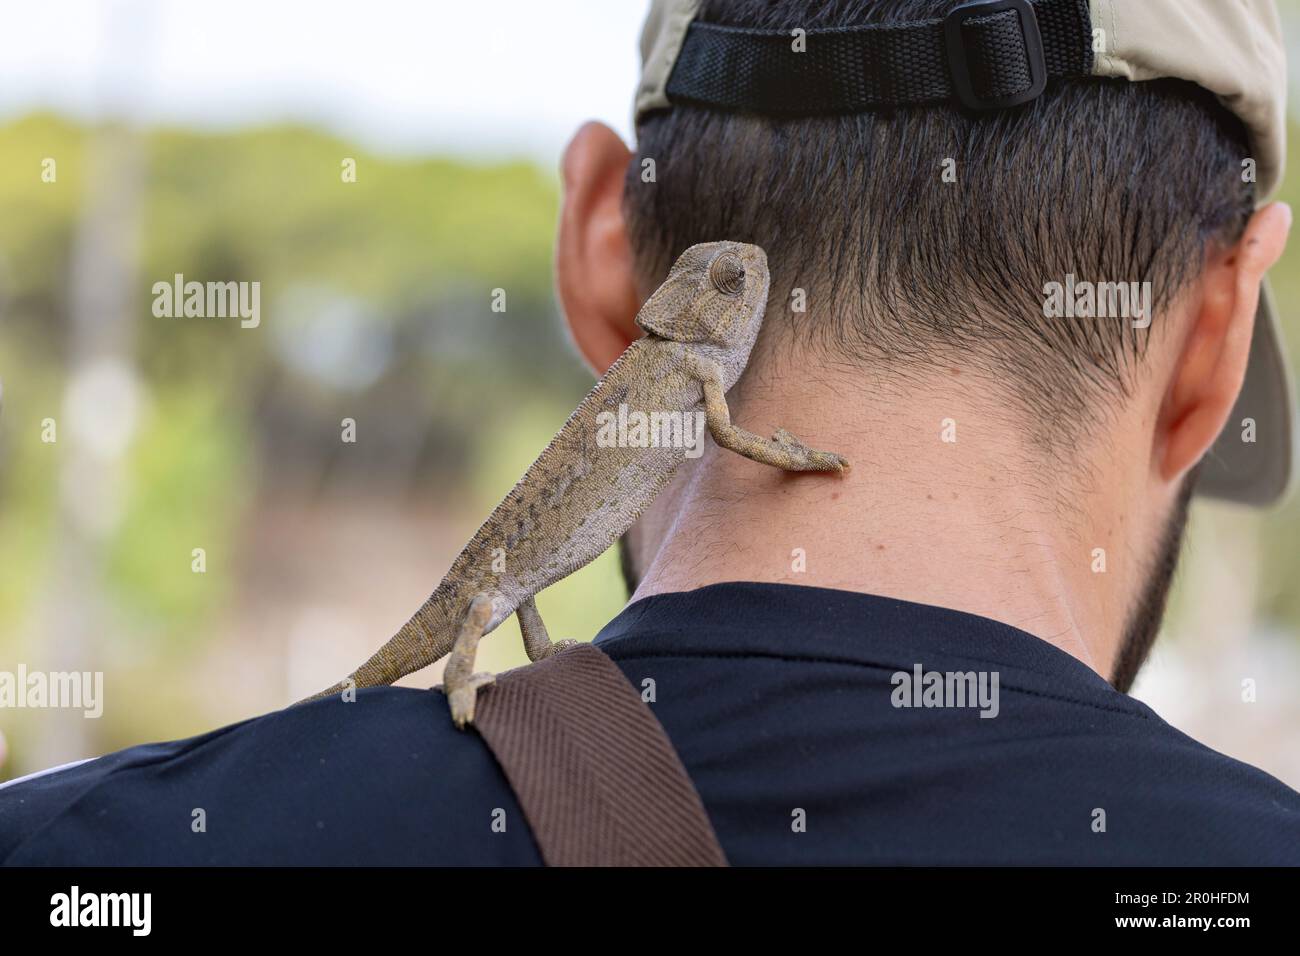 Camaleonte mediterraneo, camaleonte africano, camaleonte comune (Chamaeleo chamaeleon), scalata individuale sulle spalle di un uomo, Spagna, Foto Stock